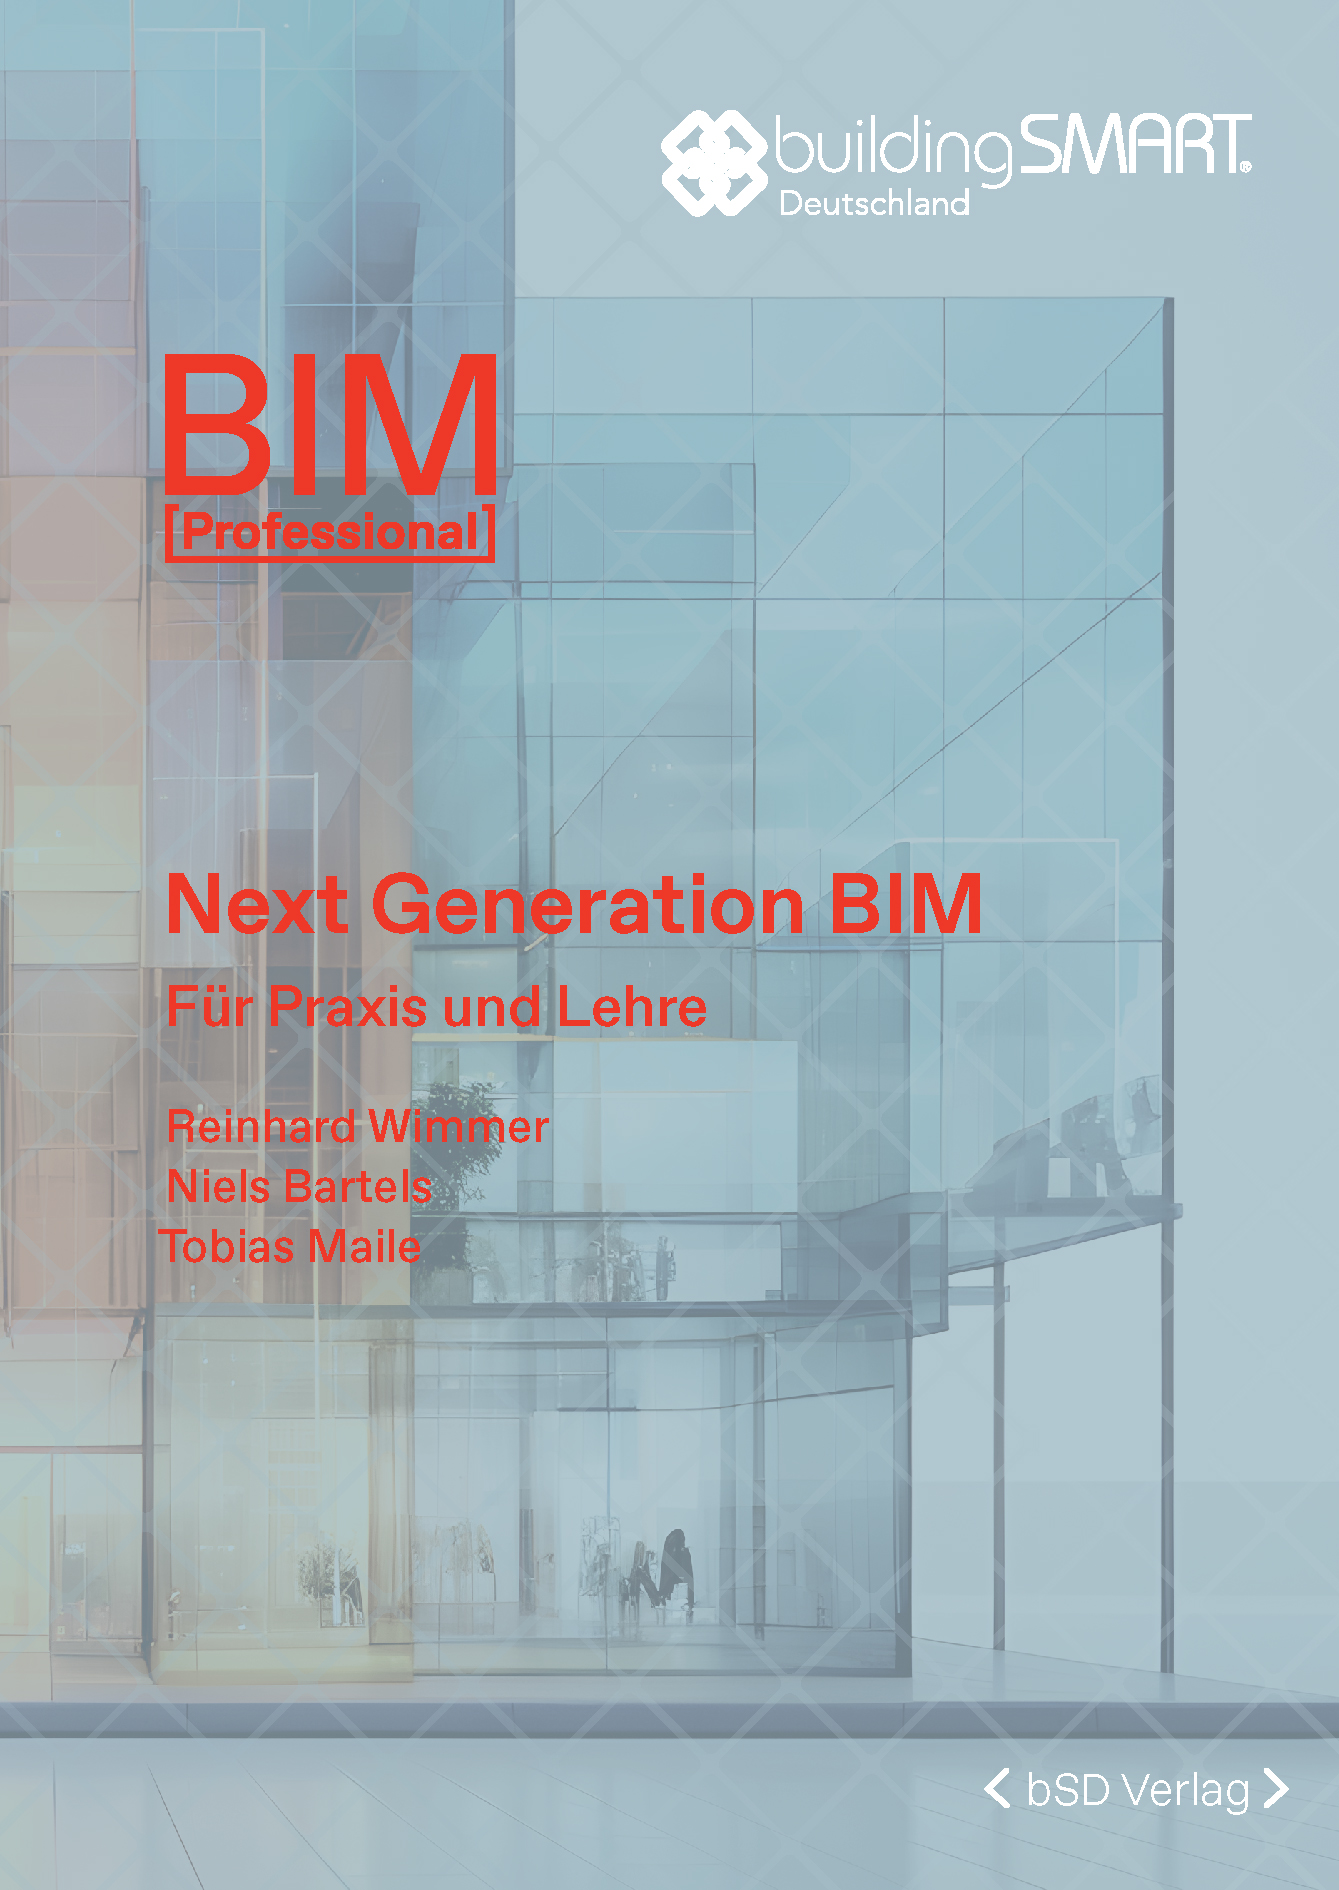 bSD Verlag/BIM Professional: Next Generation BIM